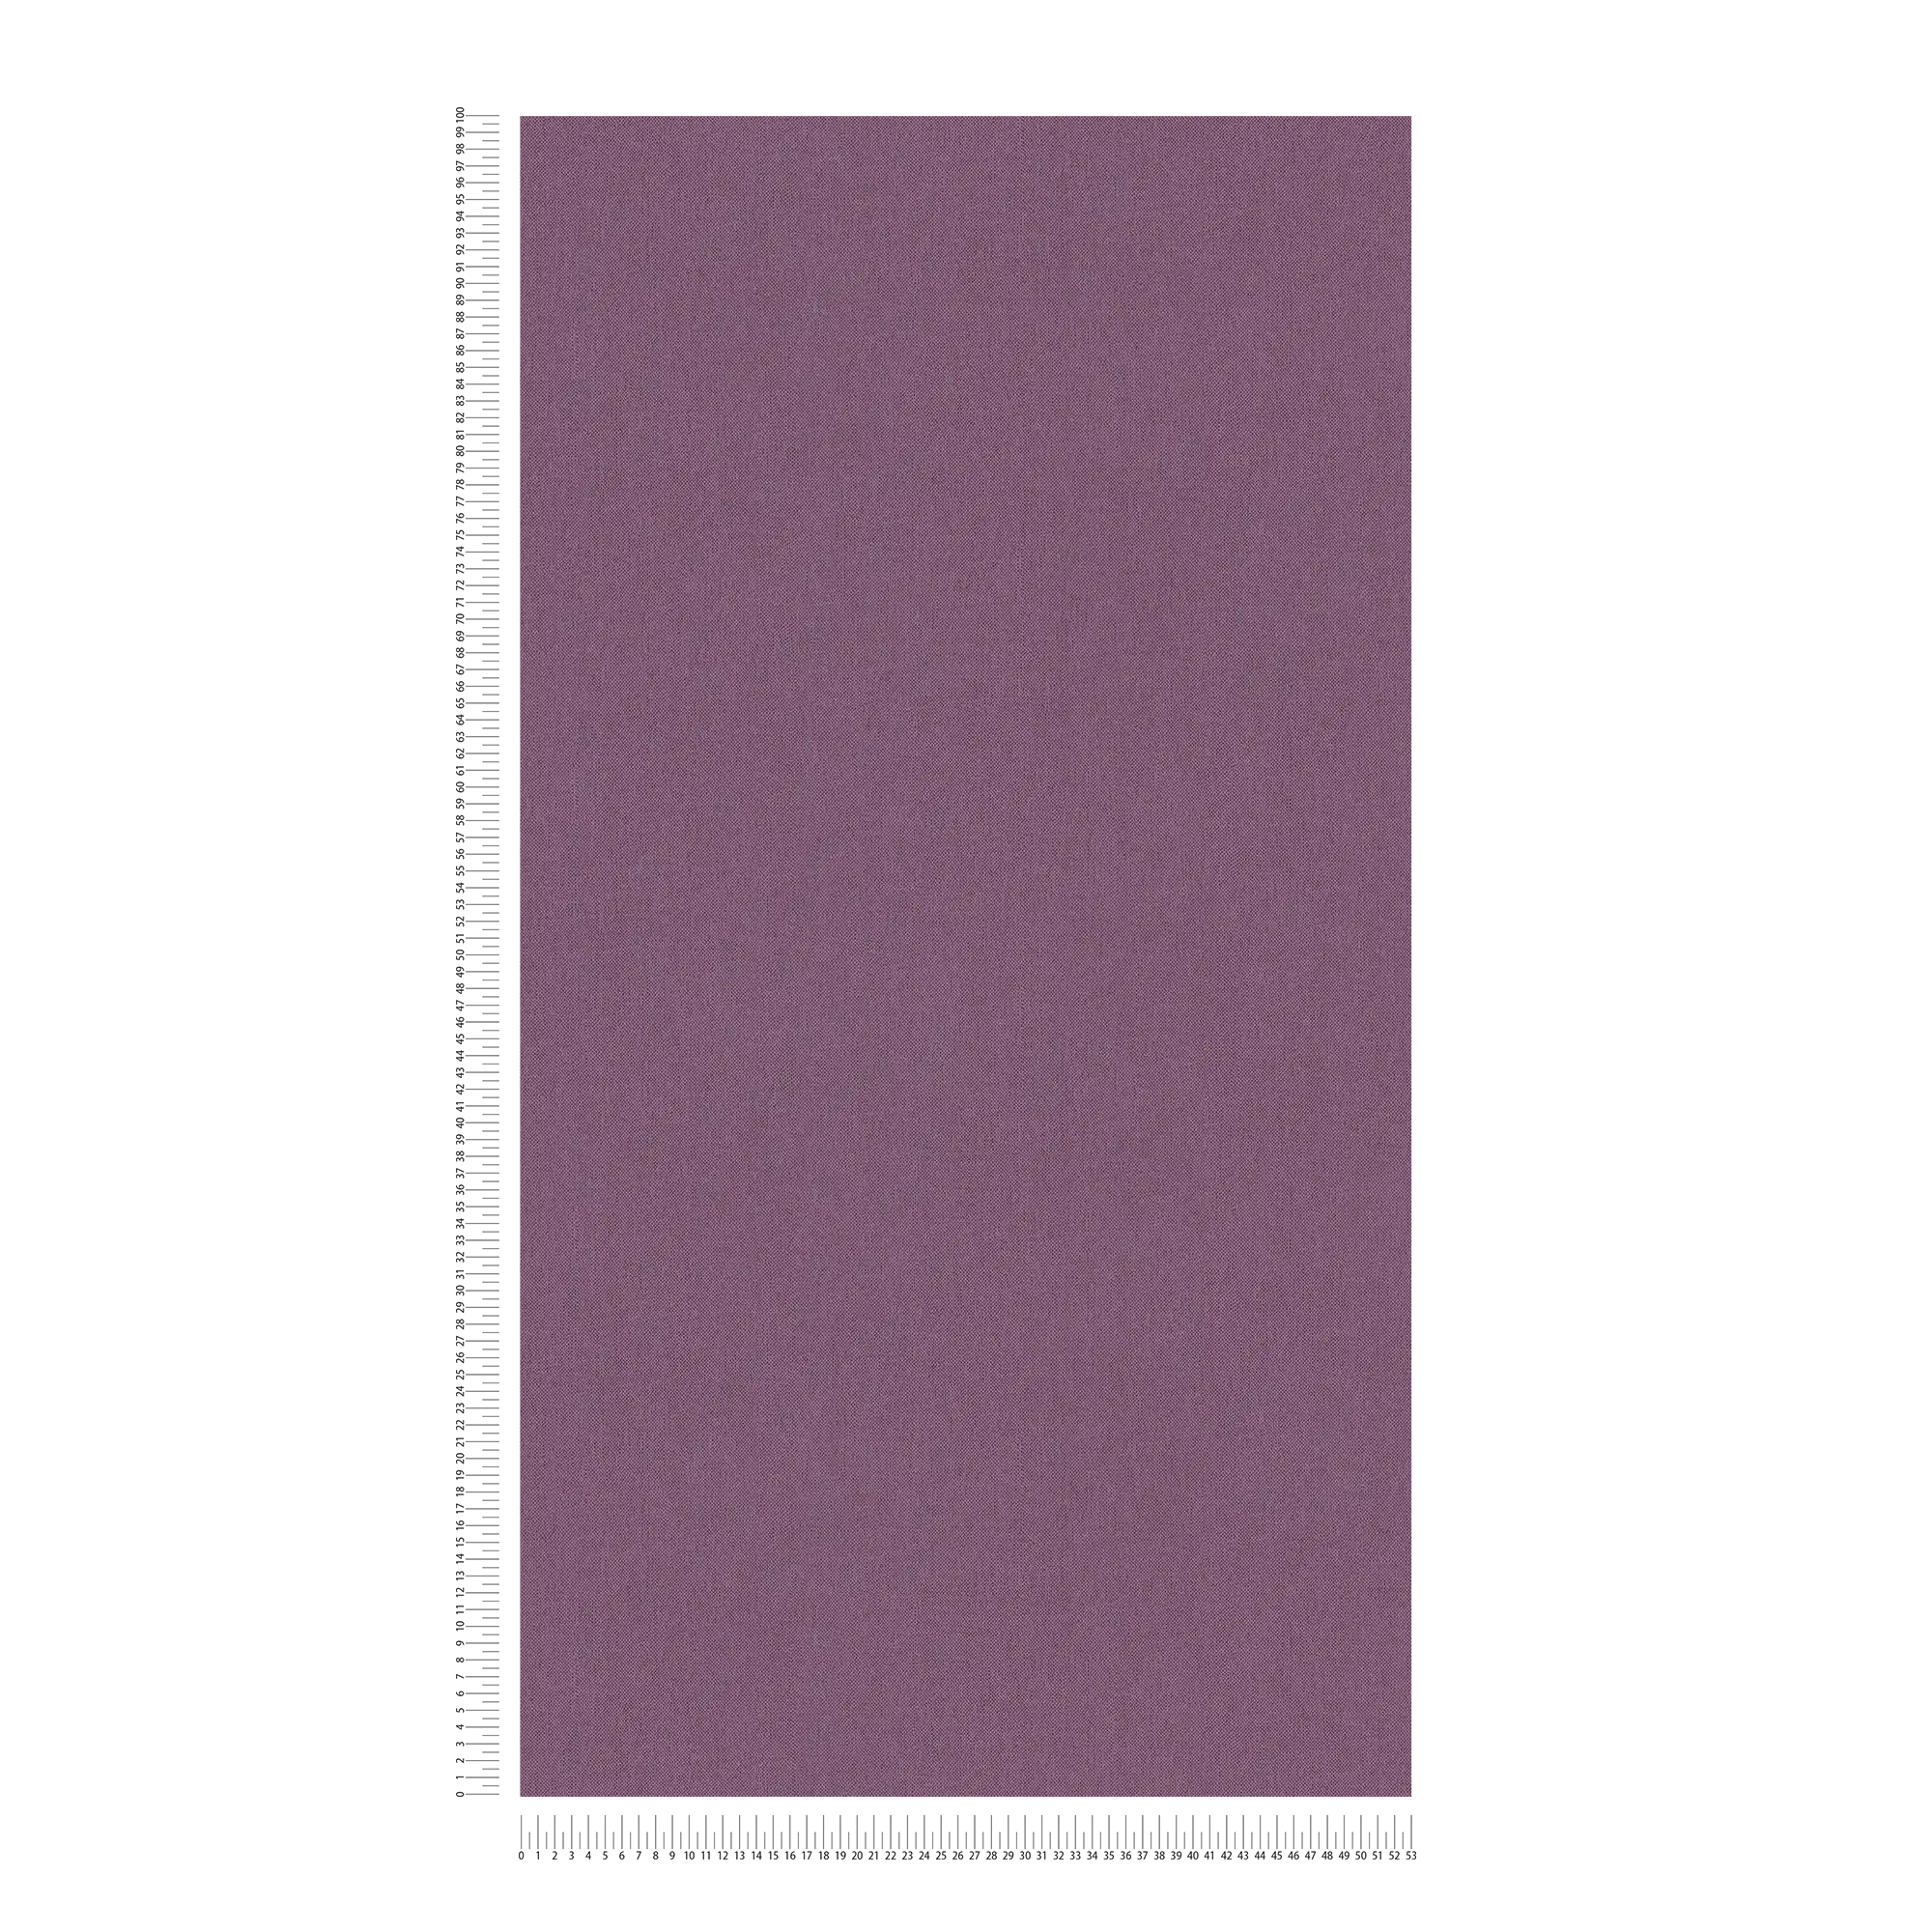             Carta da parati viola a tinta unita, aspetto tessile opaco e texture del tessuto
        